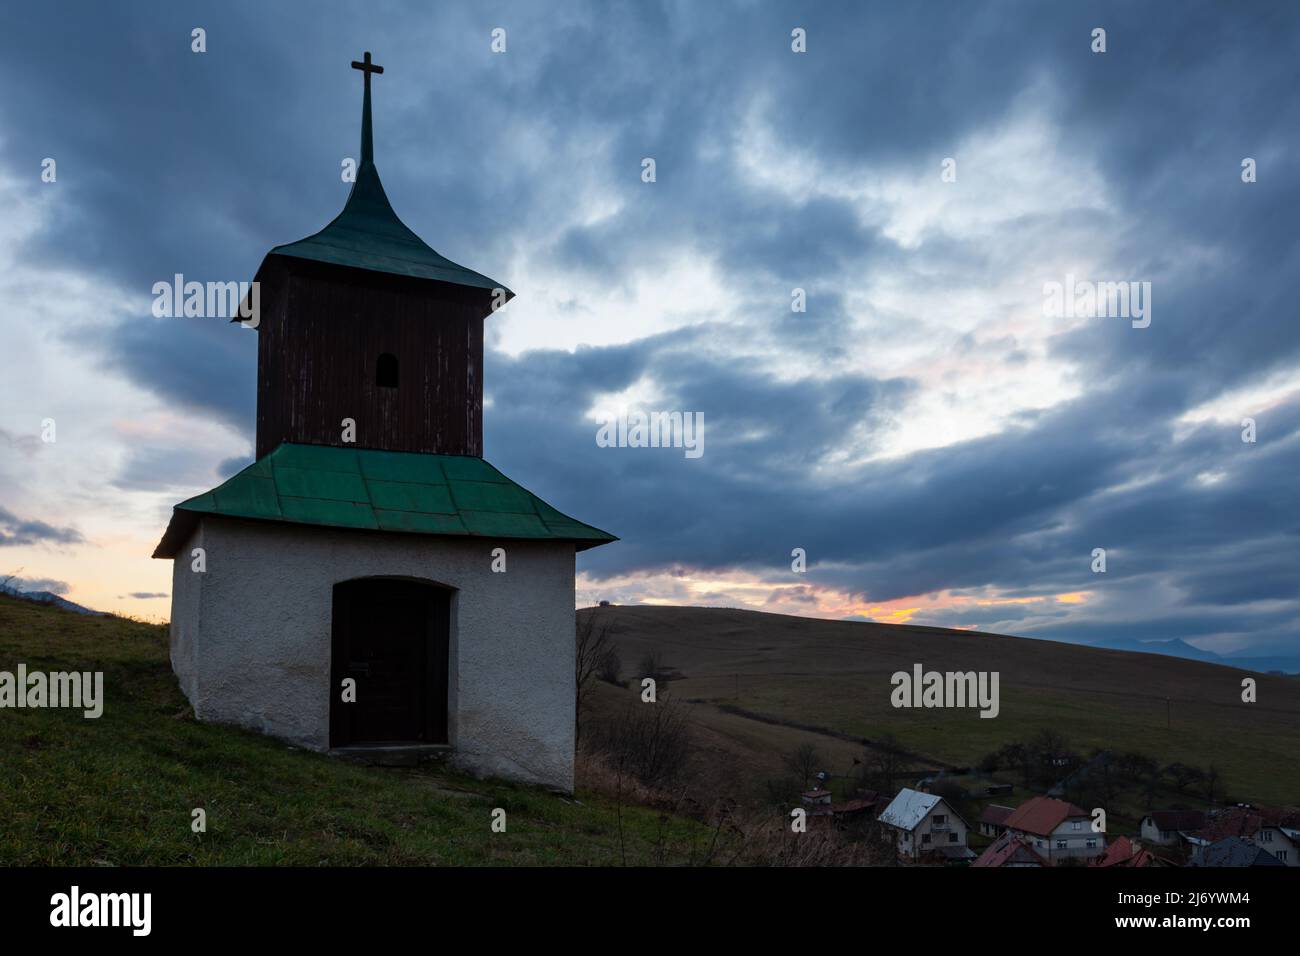 Historical Bell tower in Turcianske Jaseno village, Slovakia. Stock Photo